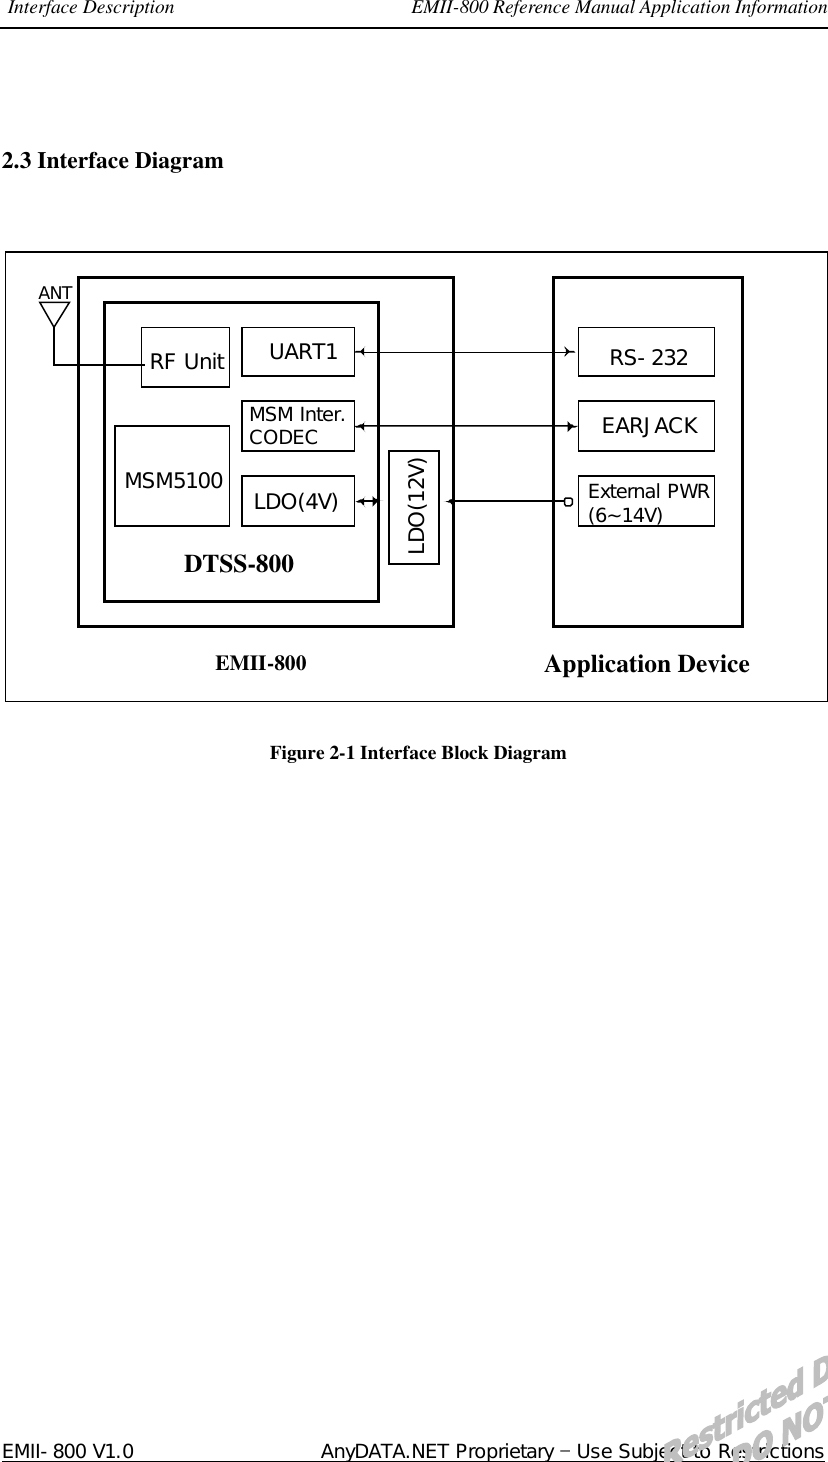 Interface Description                        EMII-800 Reference Manual Application Information  EMII-800 V1.0                   AnyDATA.NET Proprietary  Use Subject to Restrictions  2.3 Interface Diagram    RF Unit MSM5100 UART1 MSM Inter. CODEC LDO(12V) RS-232 EARJACK ANT DTSS-800 Application Device EMII-800 LDO(4V) External PWR (6~14V)   Figure 2-1 Interface Block Diagram  